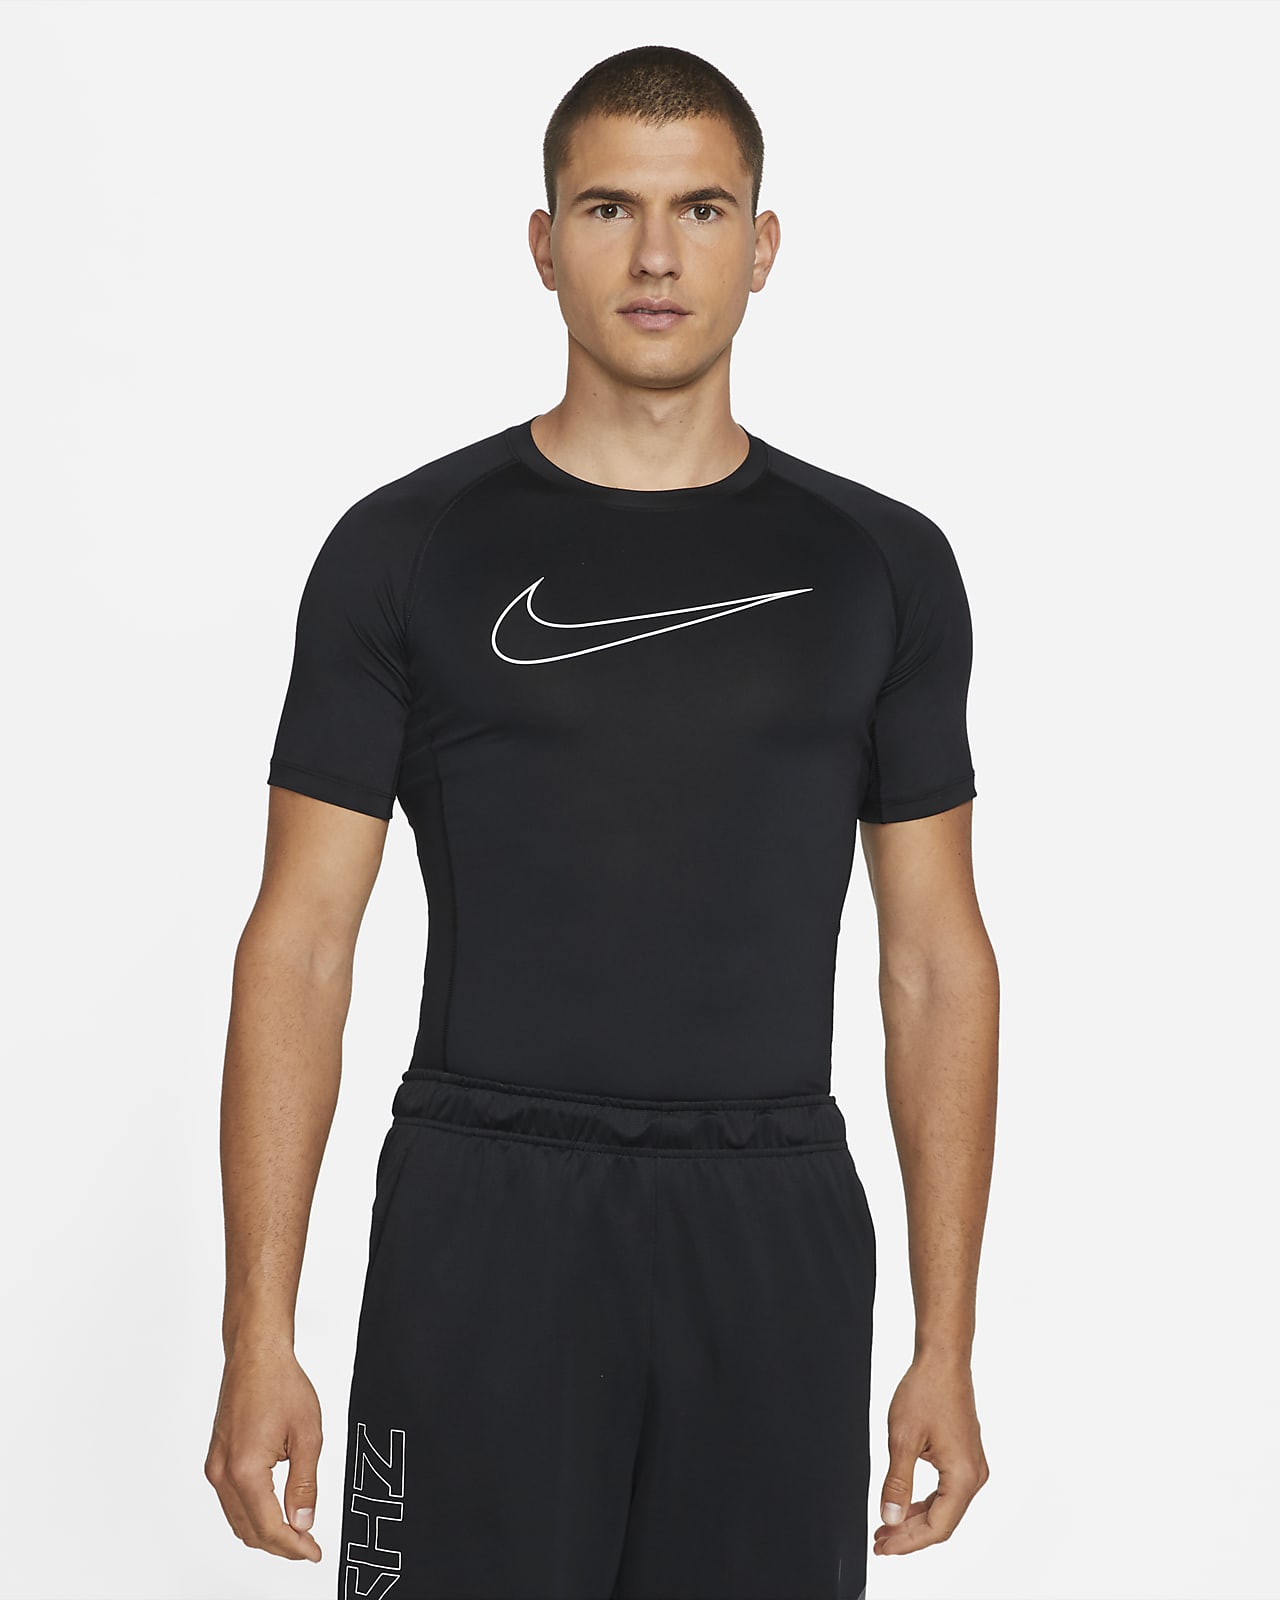 goedkeuren koffie fluiten Nike Pro Dri-FIT Men's Tight Fit Short-Sleeve Top. Nike.com